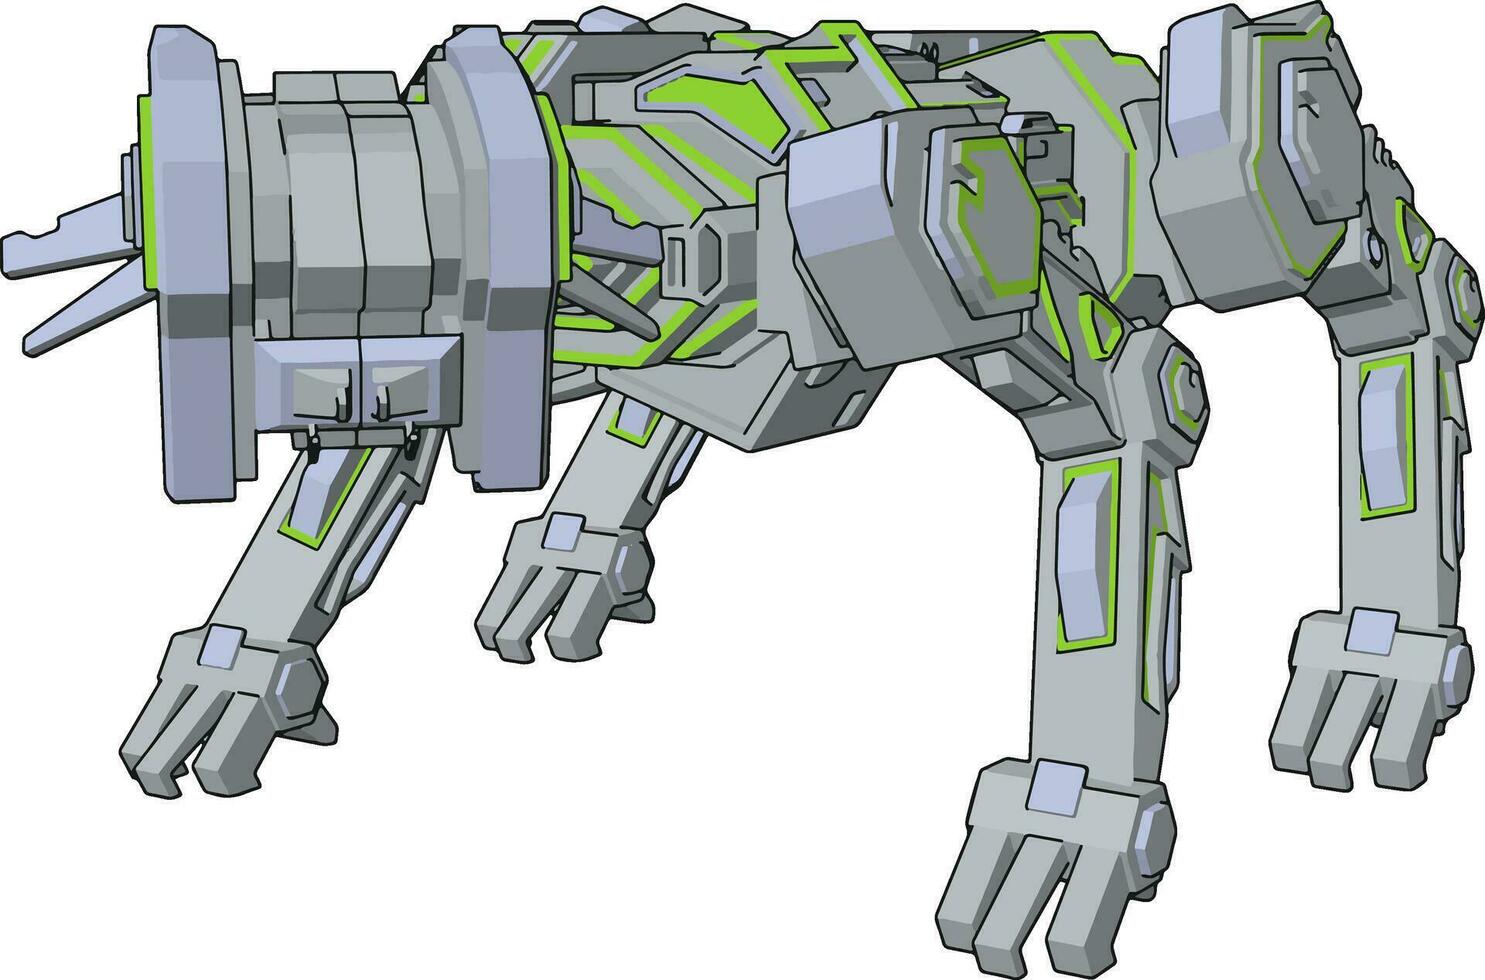 Dog green robot, illustration, vector on white background.